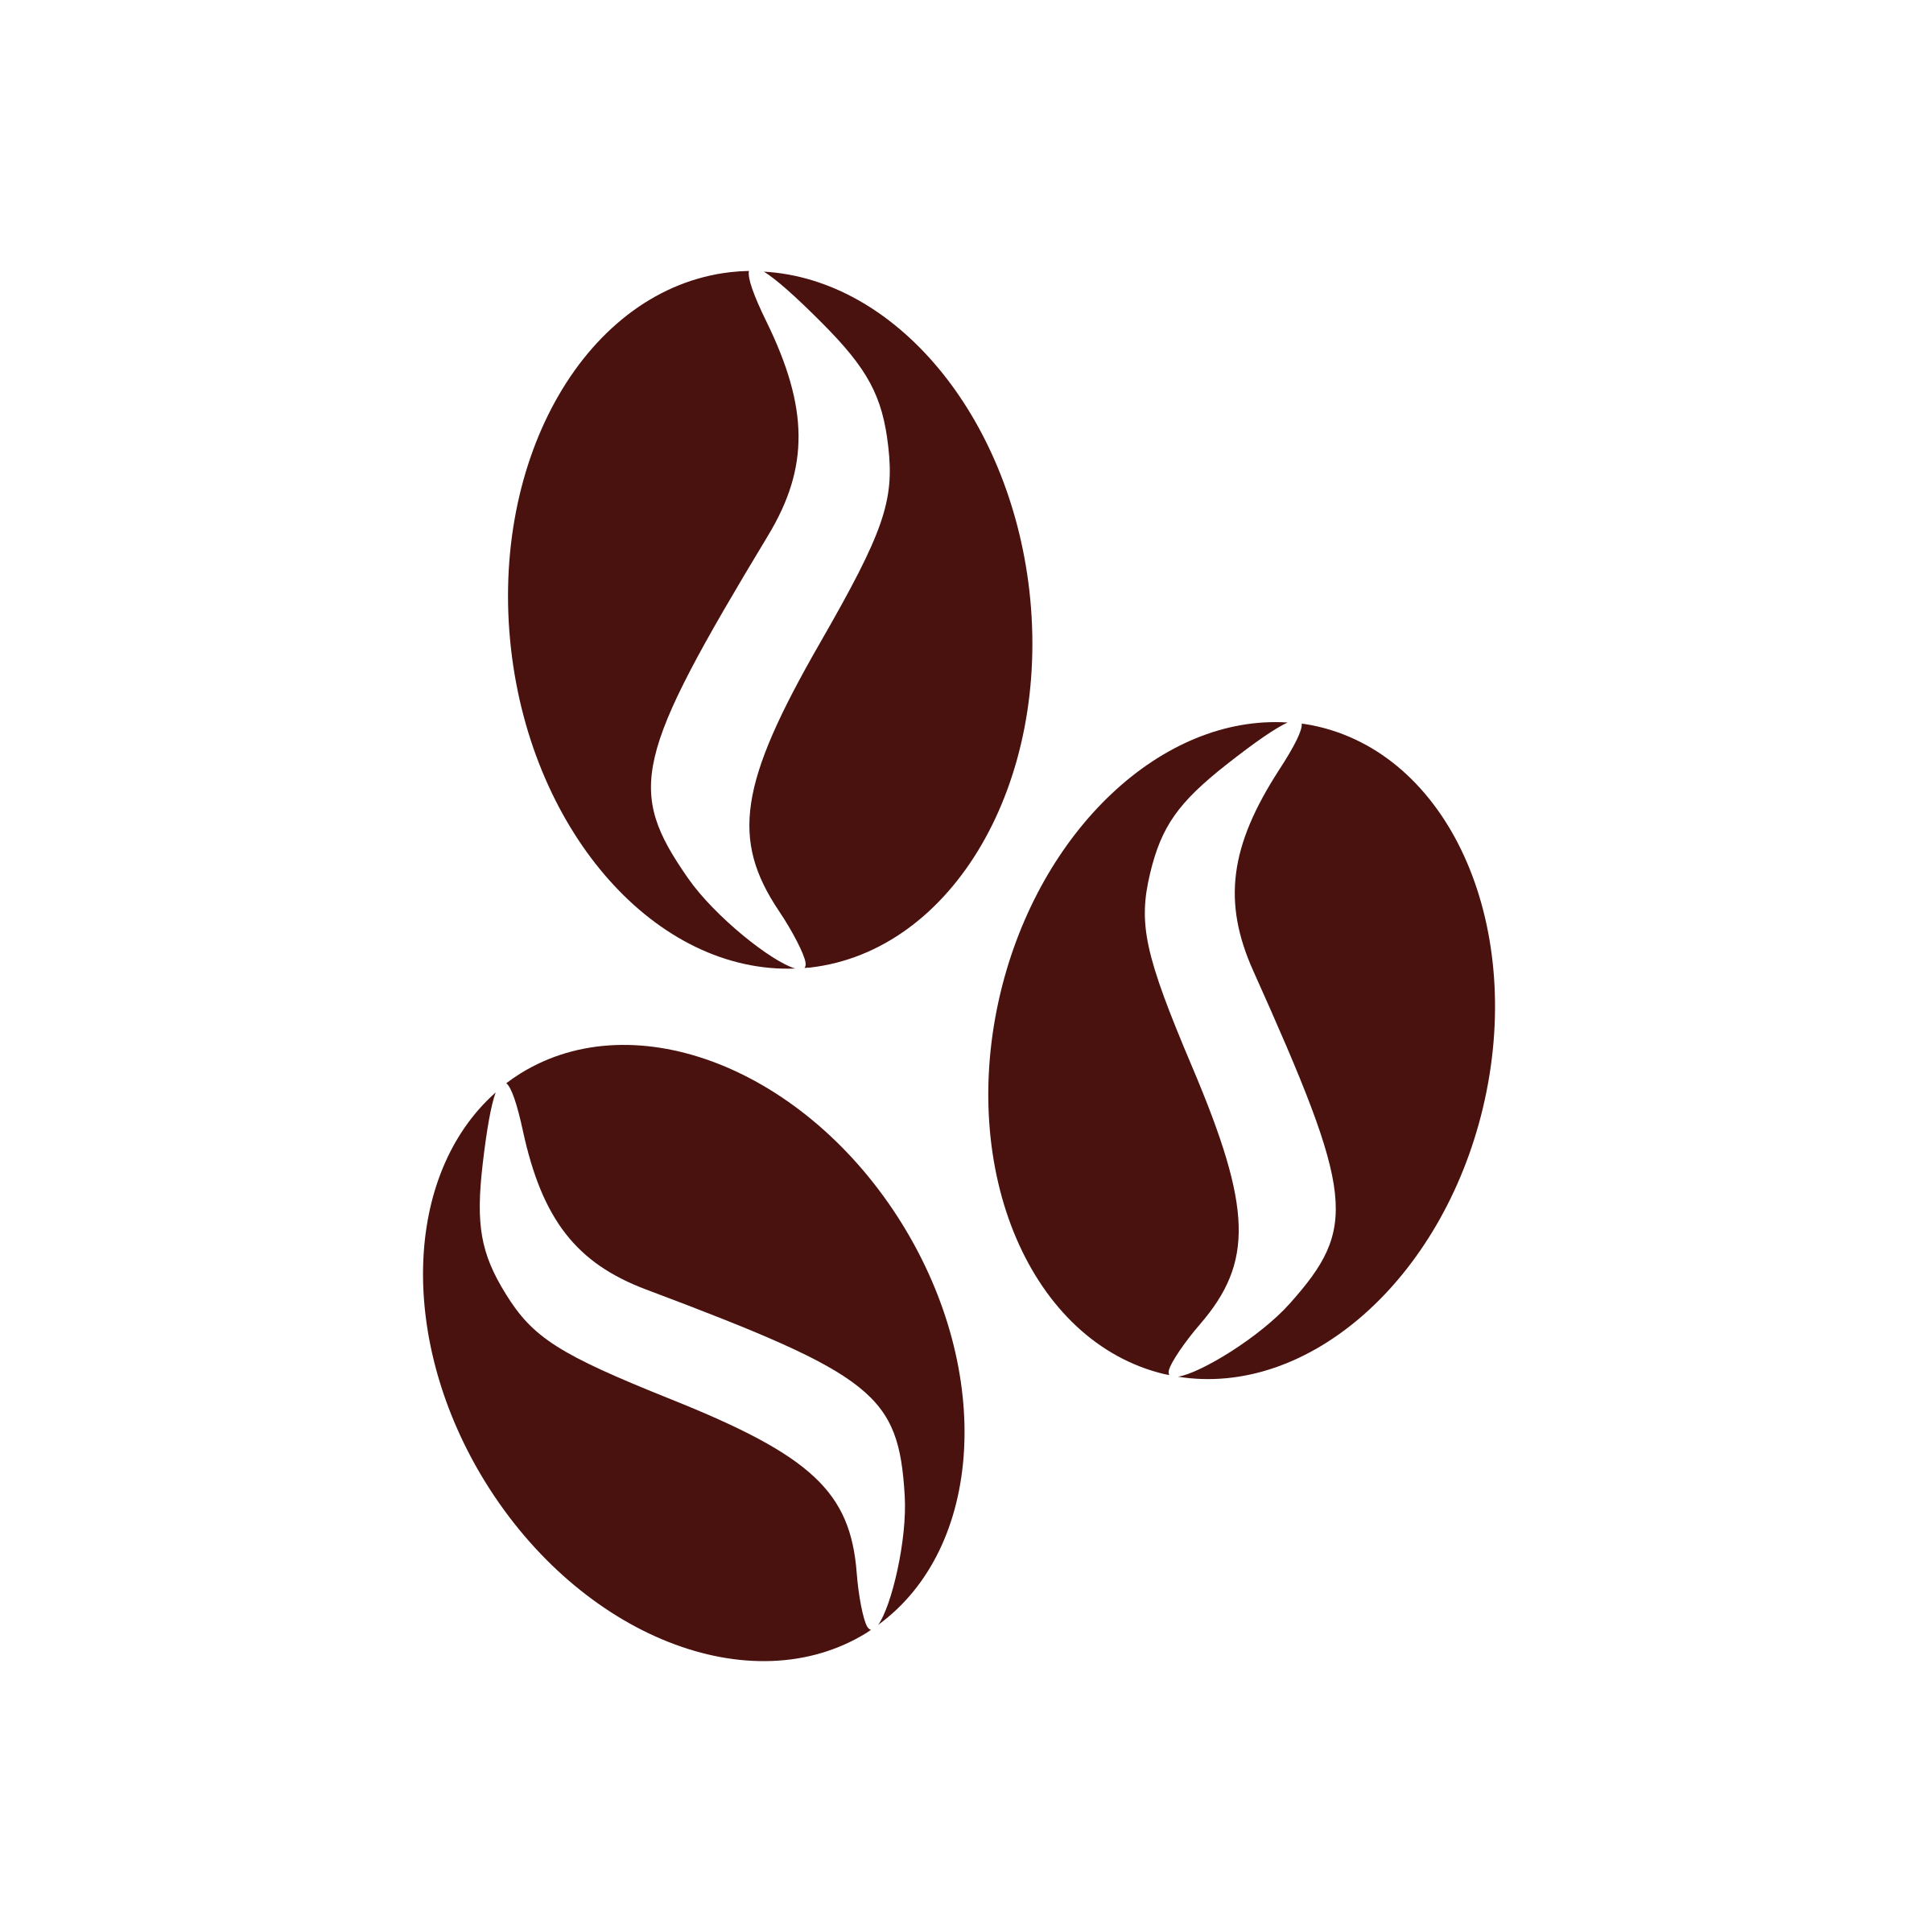 Coffee bean Logos